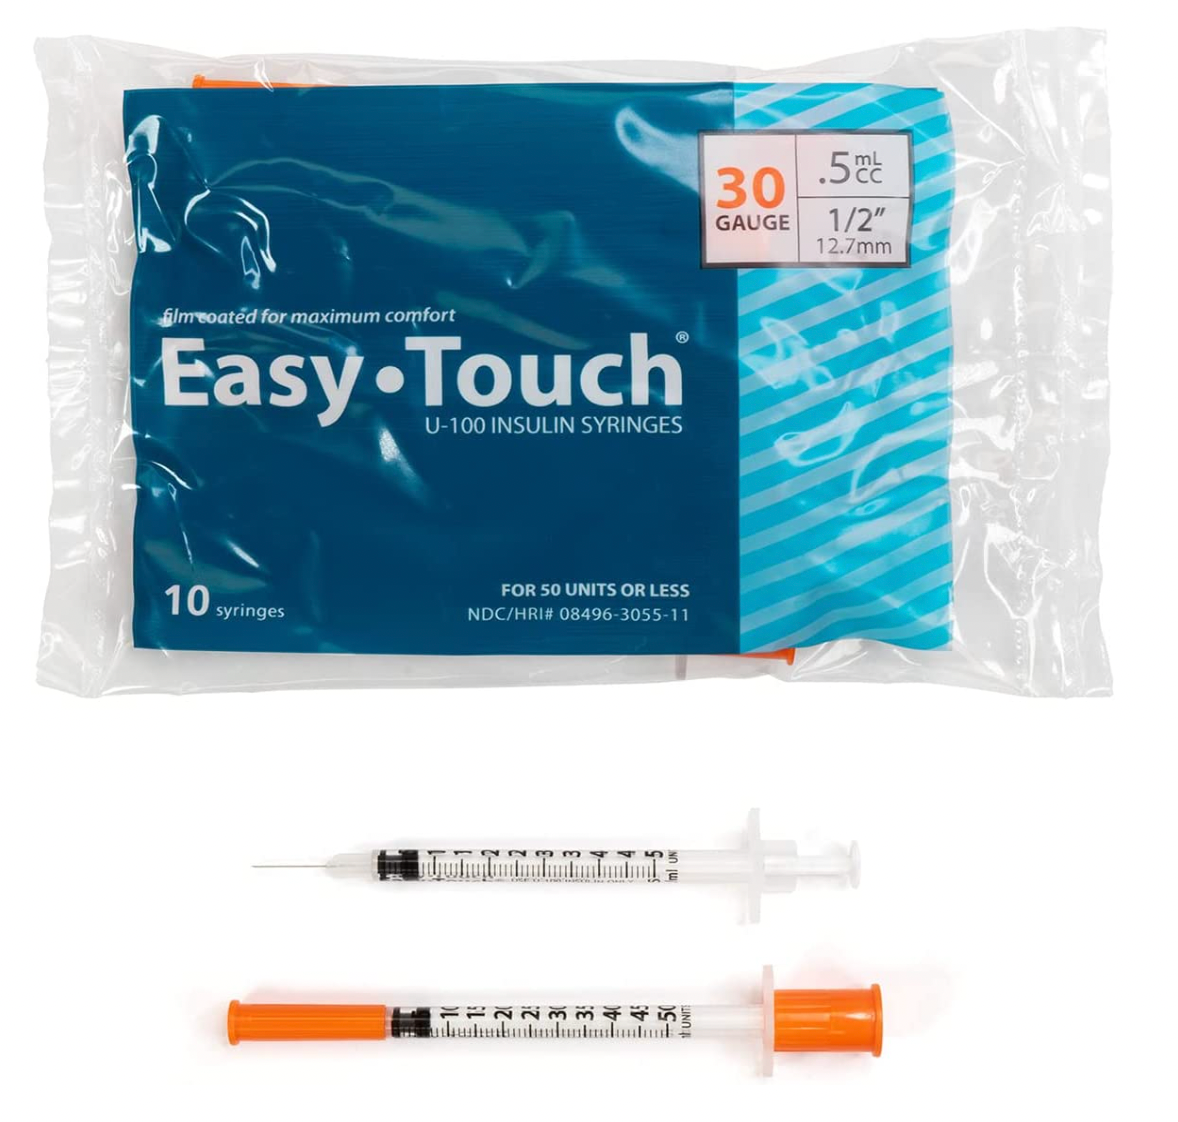 Easytouch .5cc, 30G x 1/2" Diabetic Syringe ( 3 box)